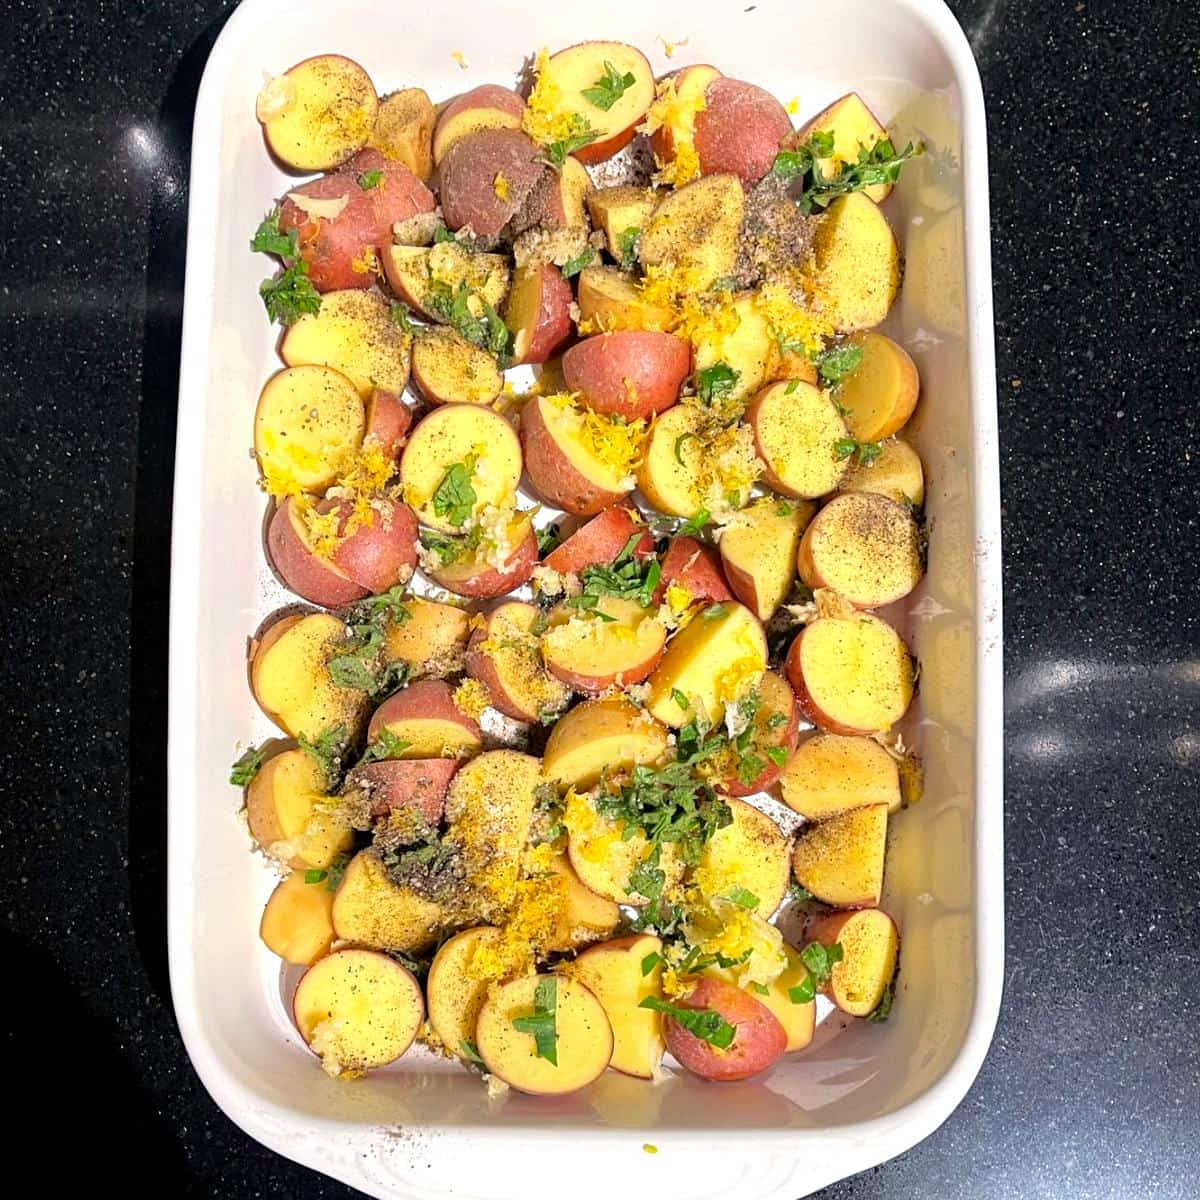 Oregano, salt, lemon zest and pepper added to potatoes in baking dish.